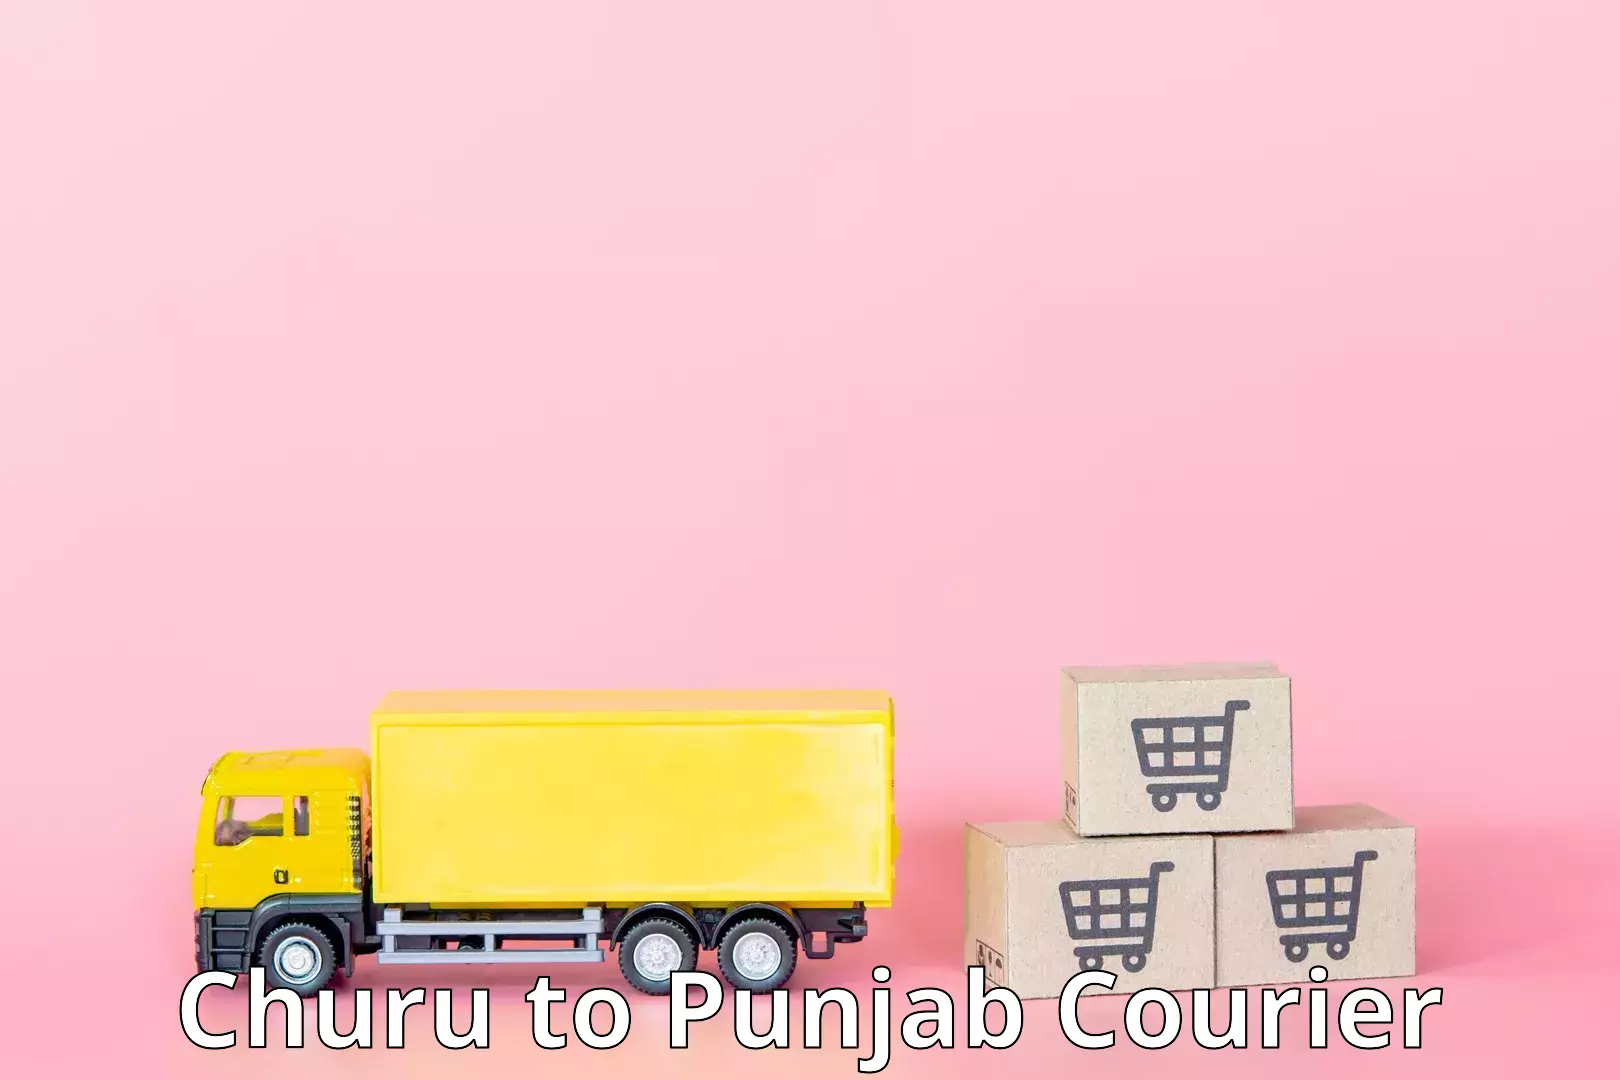 Package delivery network Churu to Sangrur